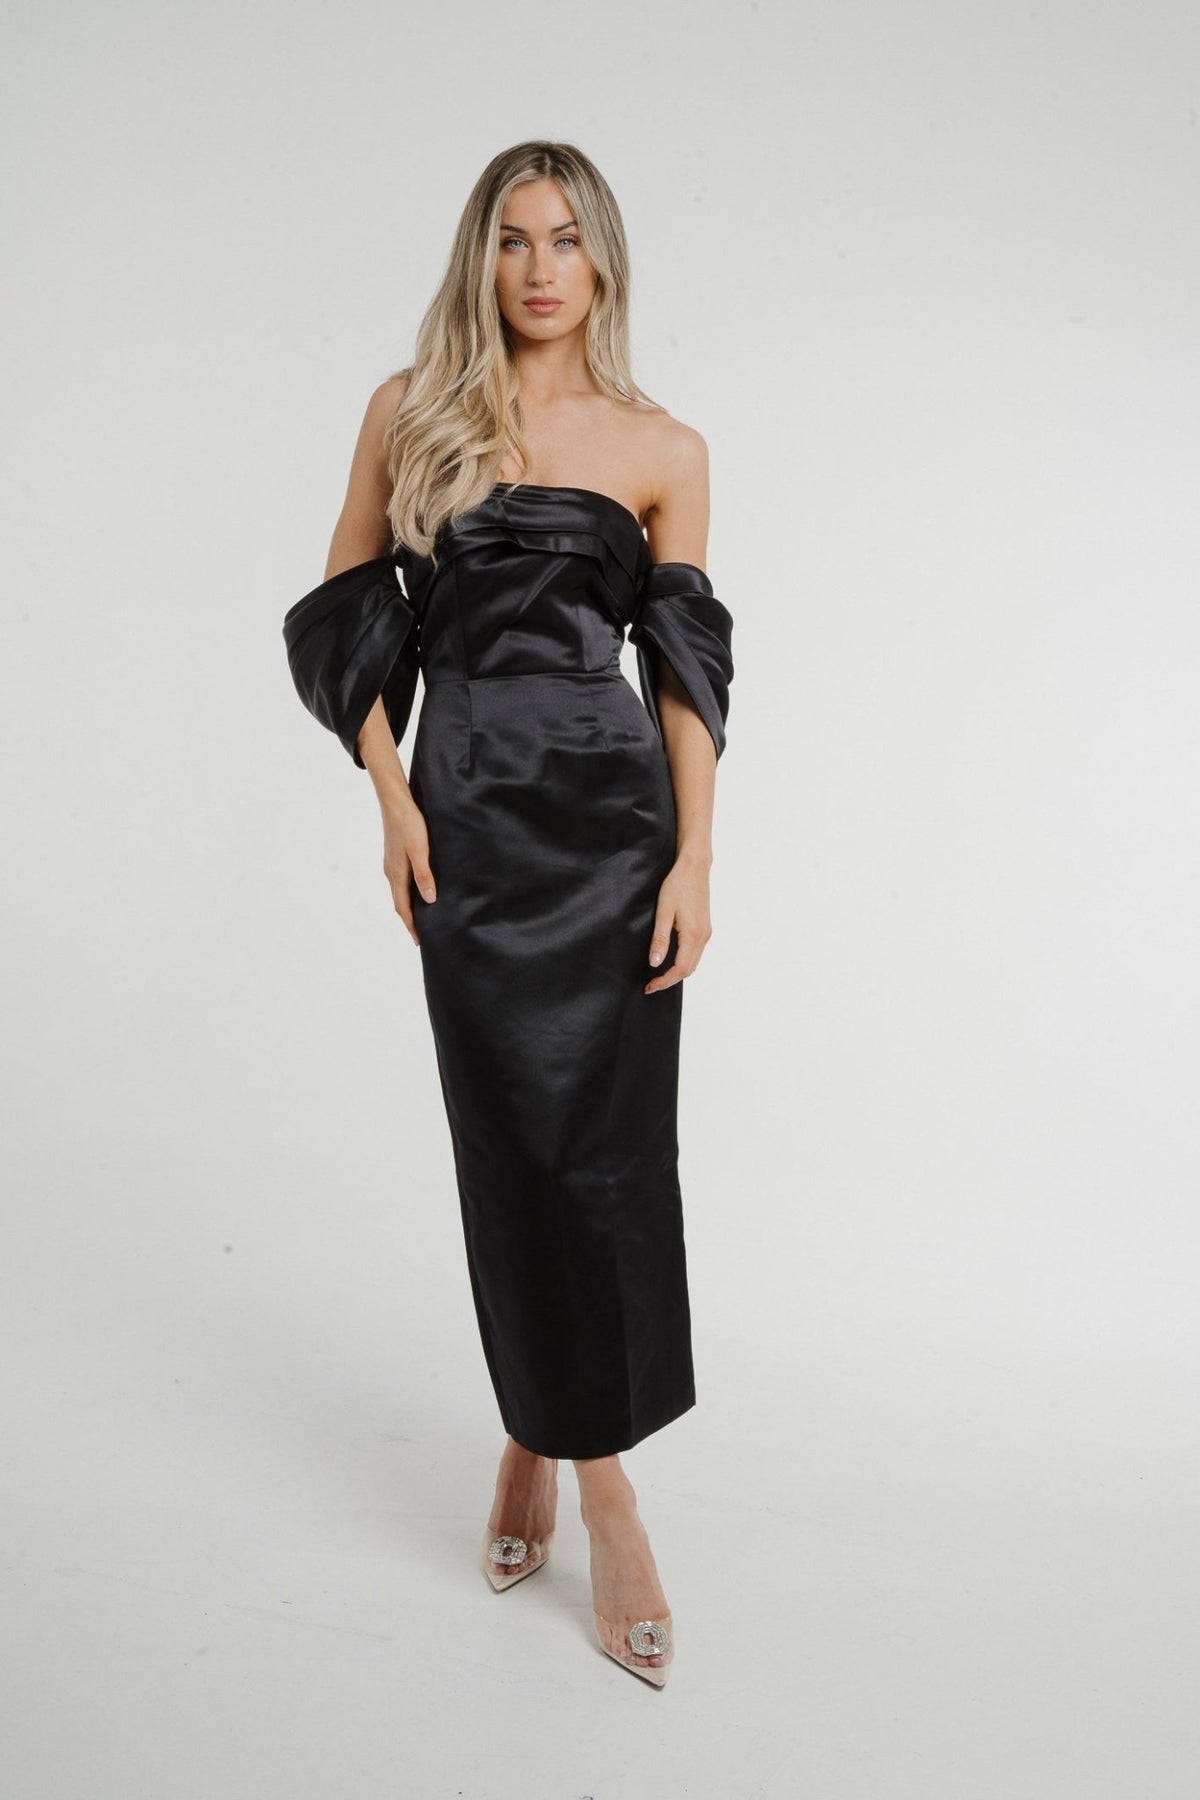 Holly Puff Sleeve Bardot Dress In Black - The Walk in Wardrobe